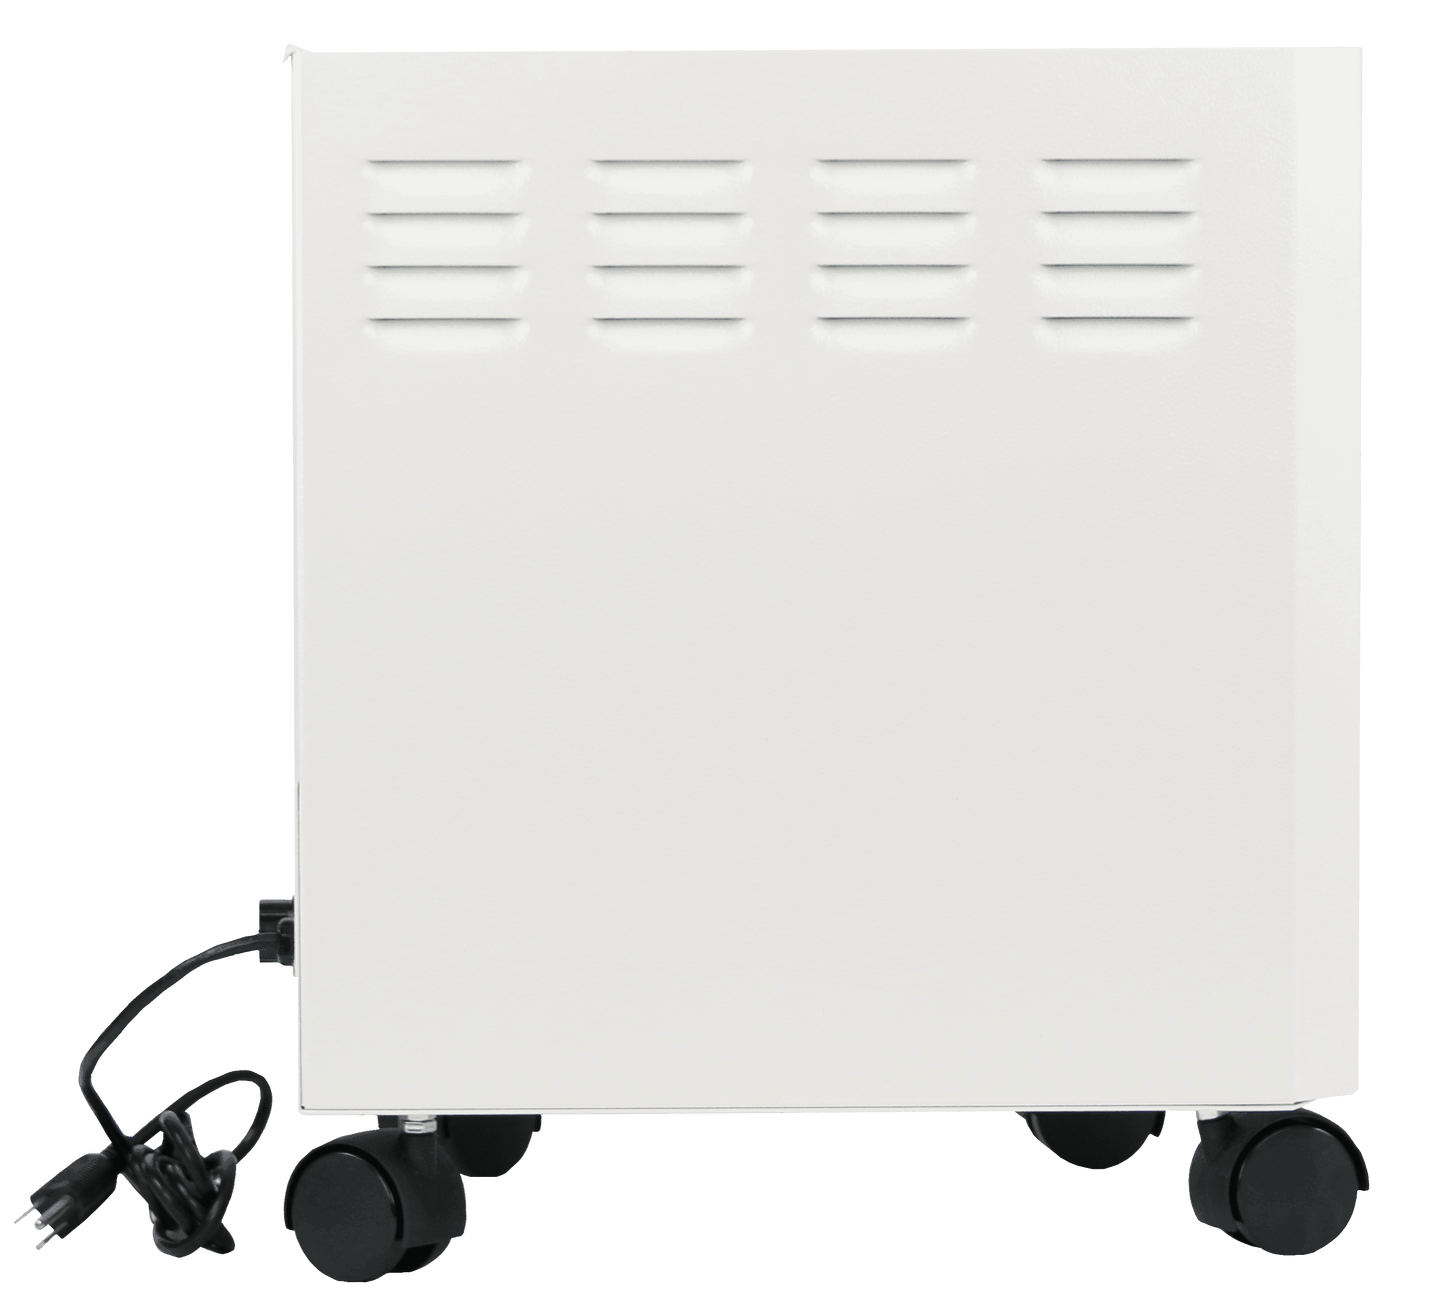 EnviroKlenz Mobile Air System Air Purifier SKU EG327-0250-00EK Uses Hospital-Grade Technology to Clean Indoor Air - Elite Air Purifiers